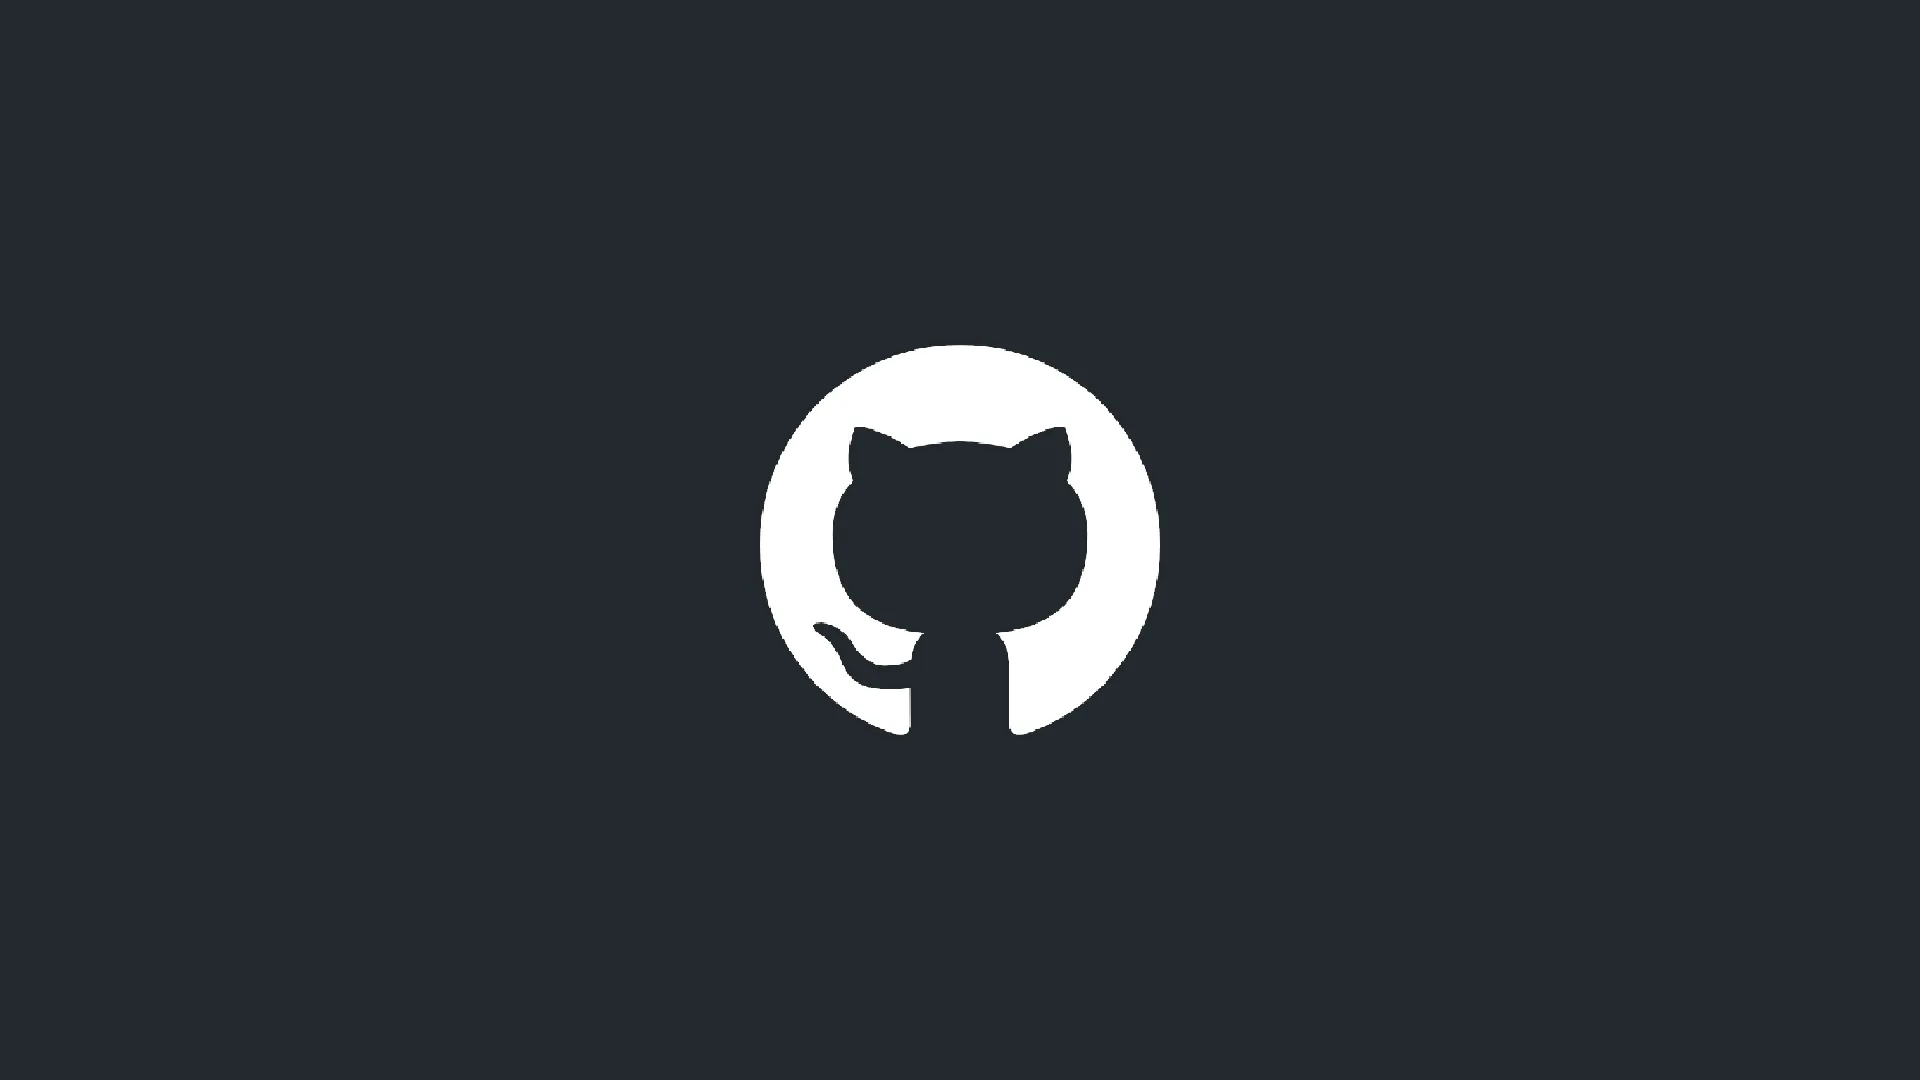 The GitHub Logo